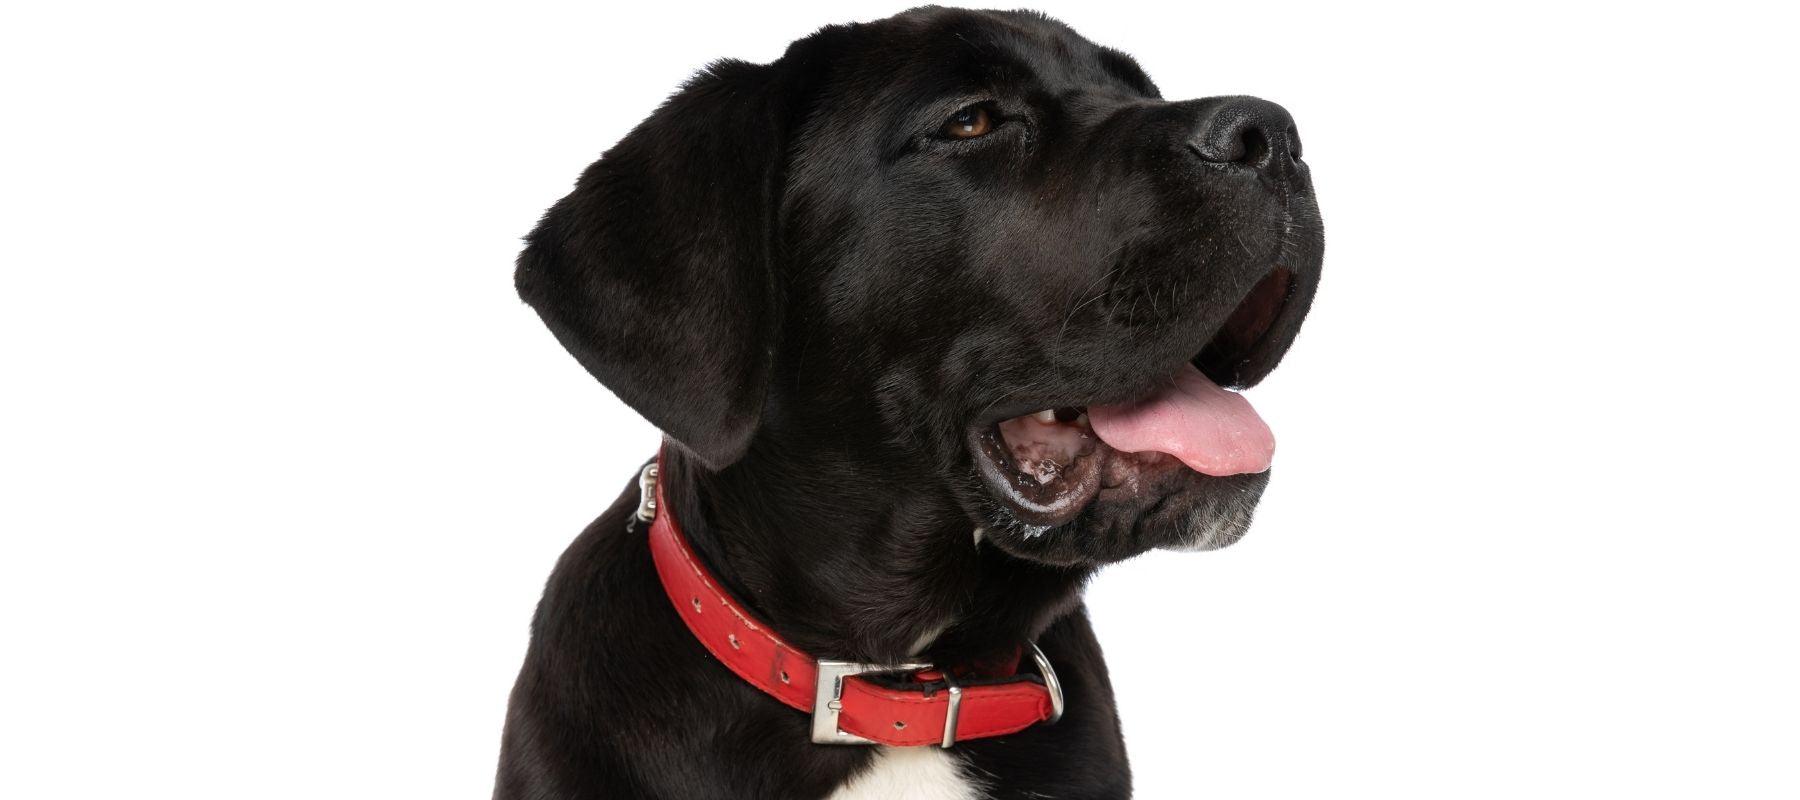 Cane Corso Dog Portrait